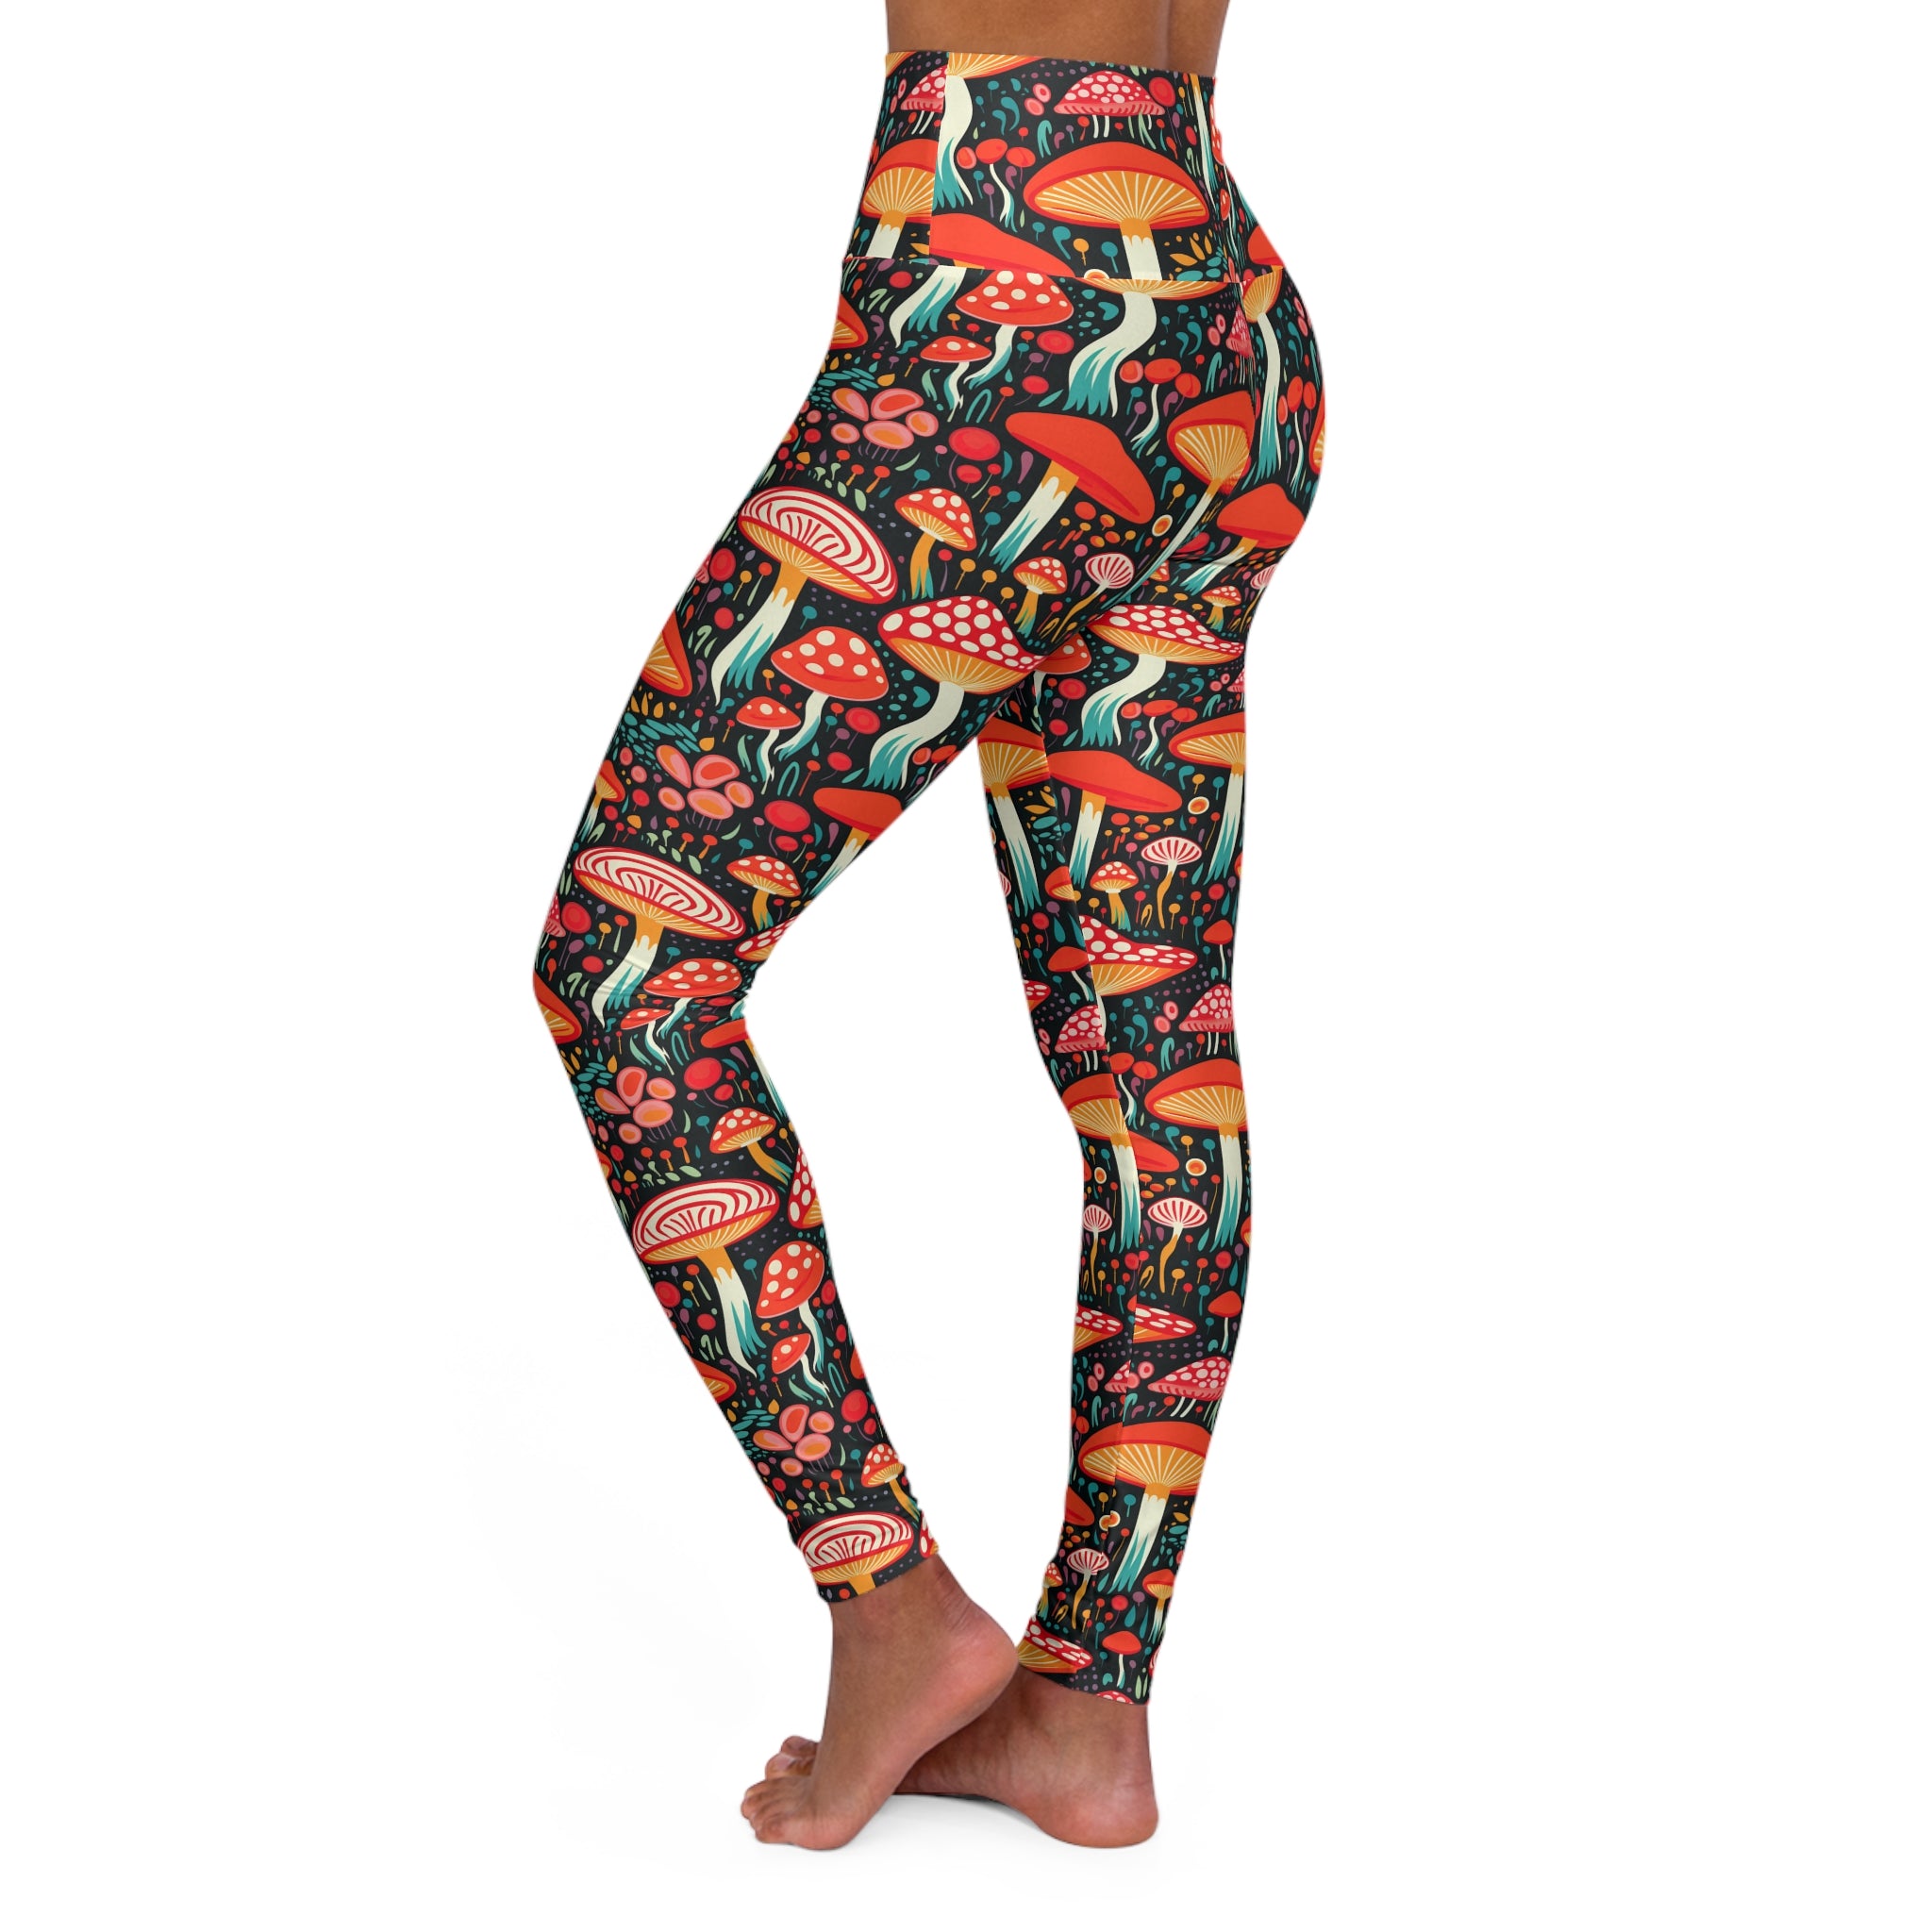 Mushroom Print Gym Leggings for Women S-2XL - Exciting & Stylish